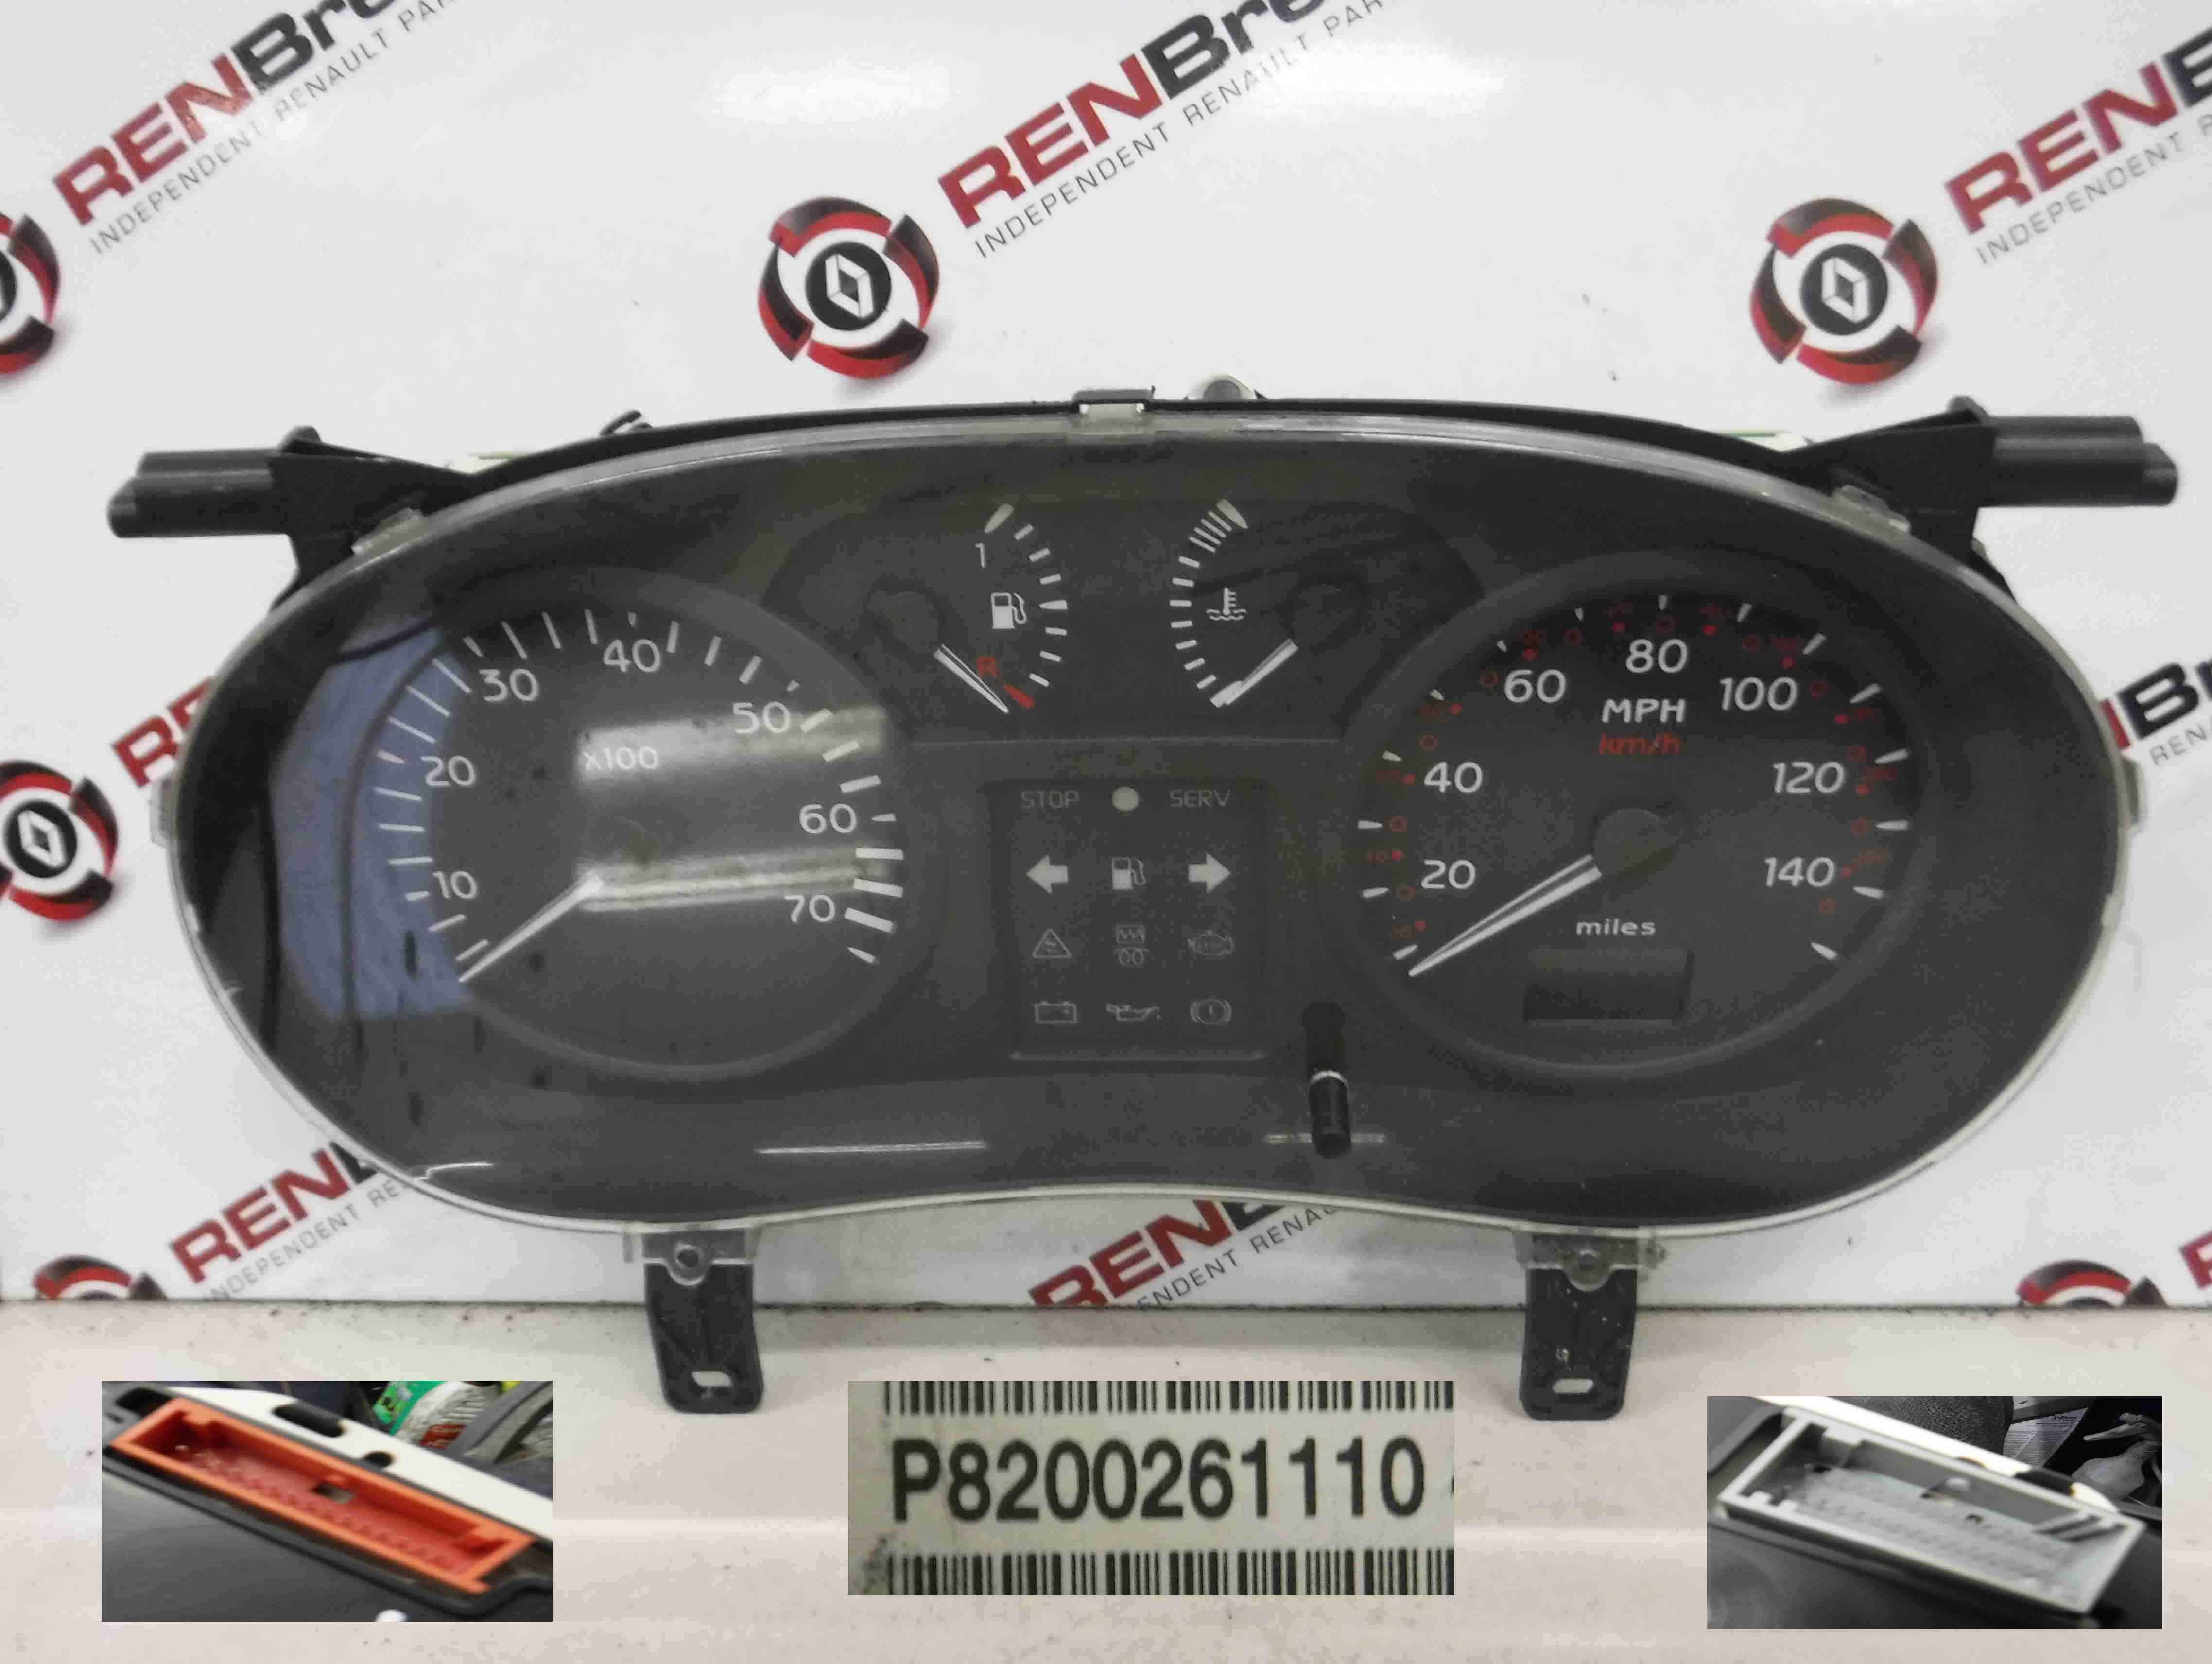 Renault Clio MK2 2001-2006 Instrument Panel Dials Gauges Speedo 8200261110